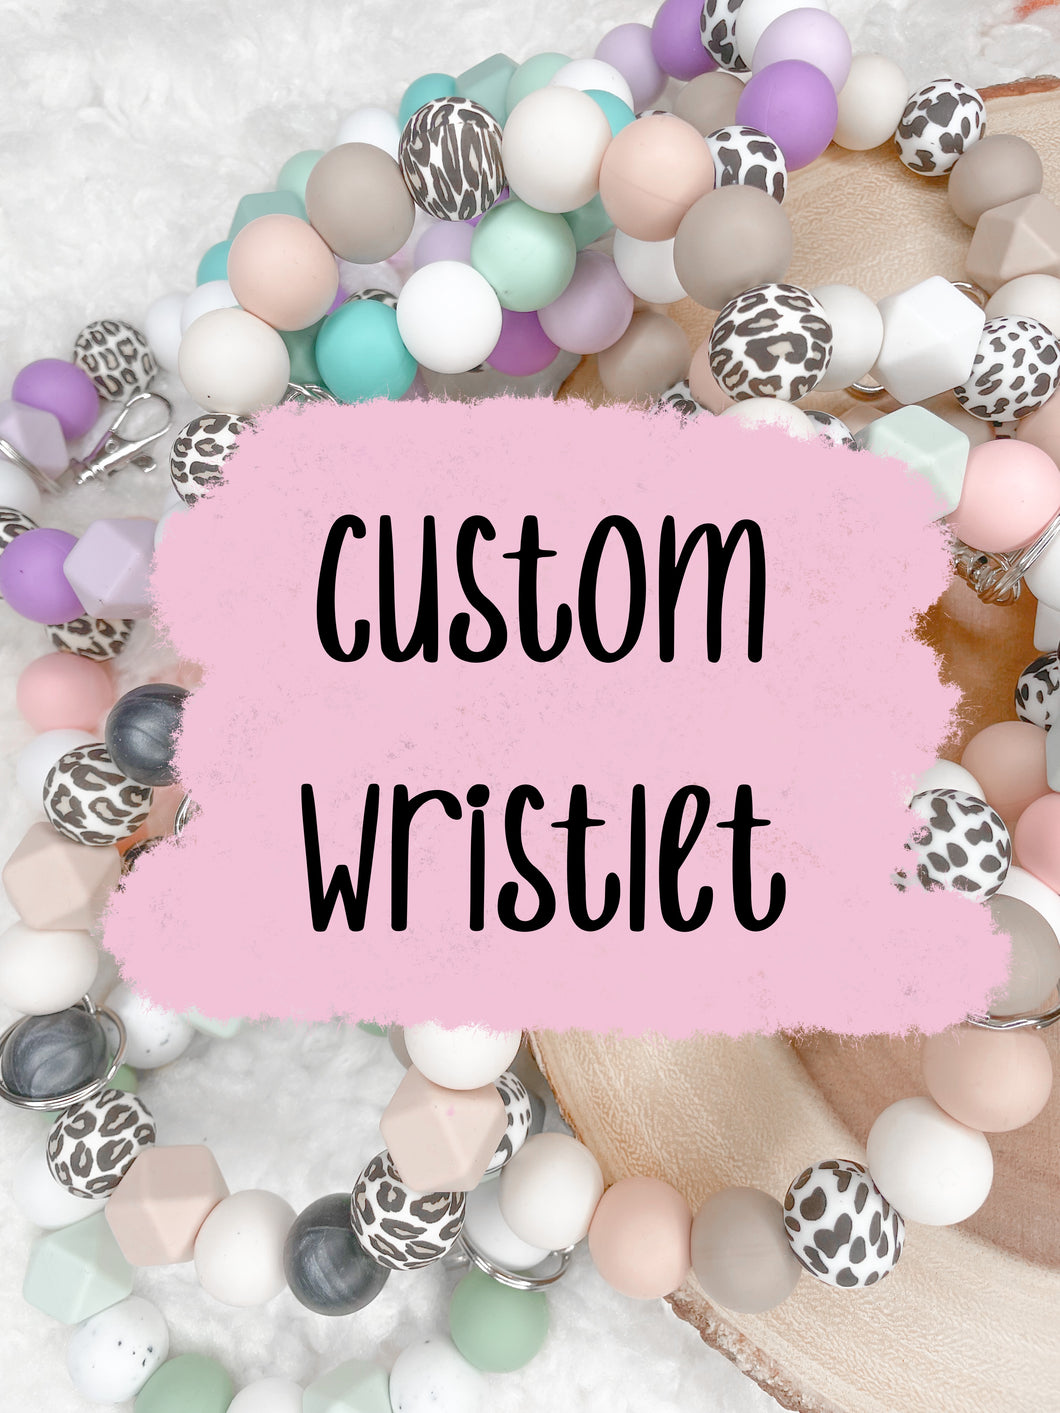 Custom Wristlet